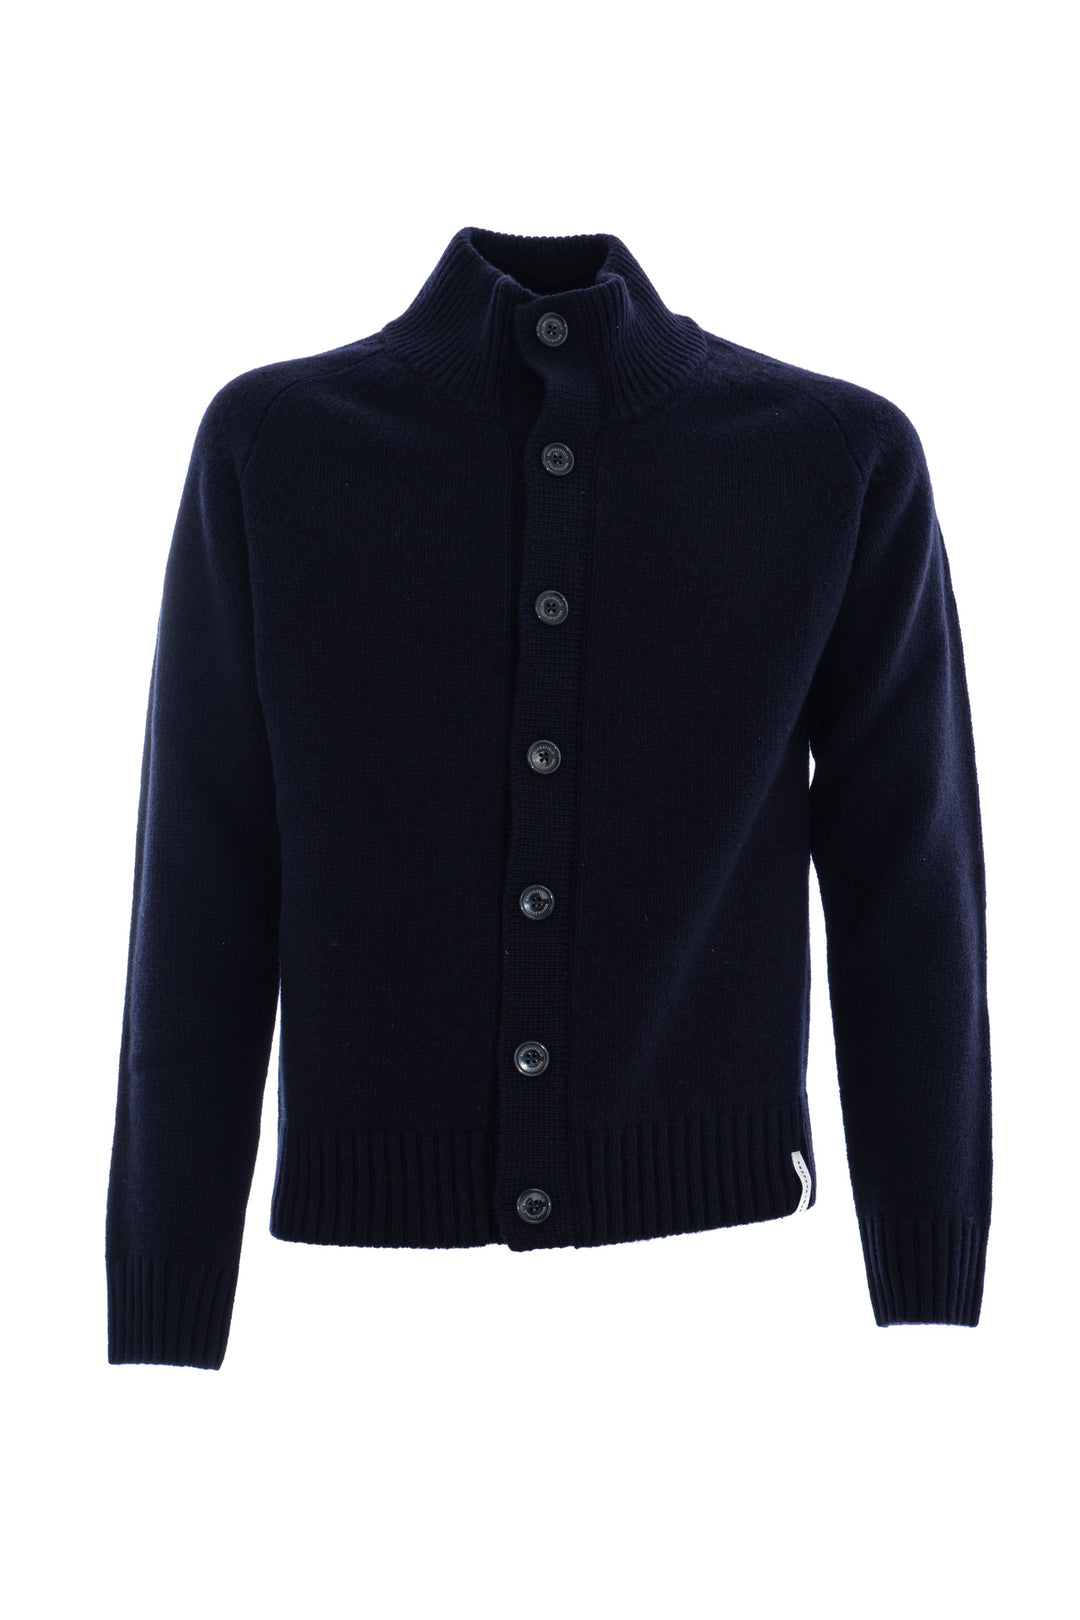 Brooksfield Cardigan a collo alto blu navy in lana con bottoni - Mancinelli 1954